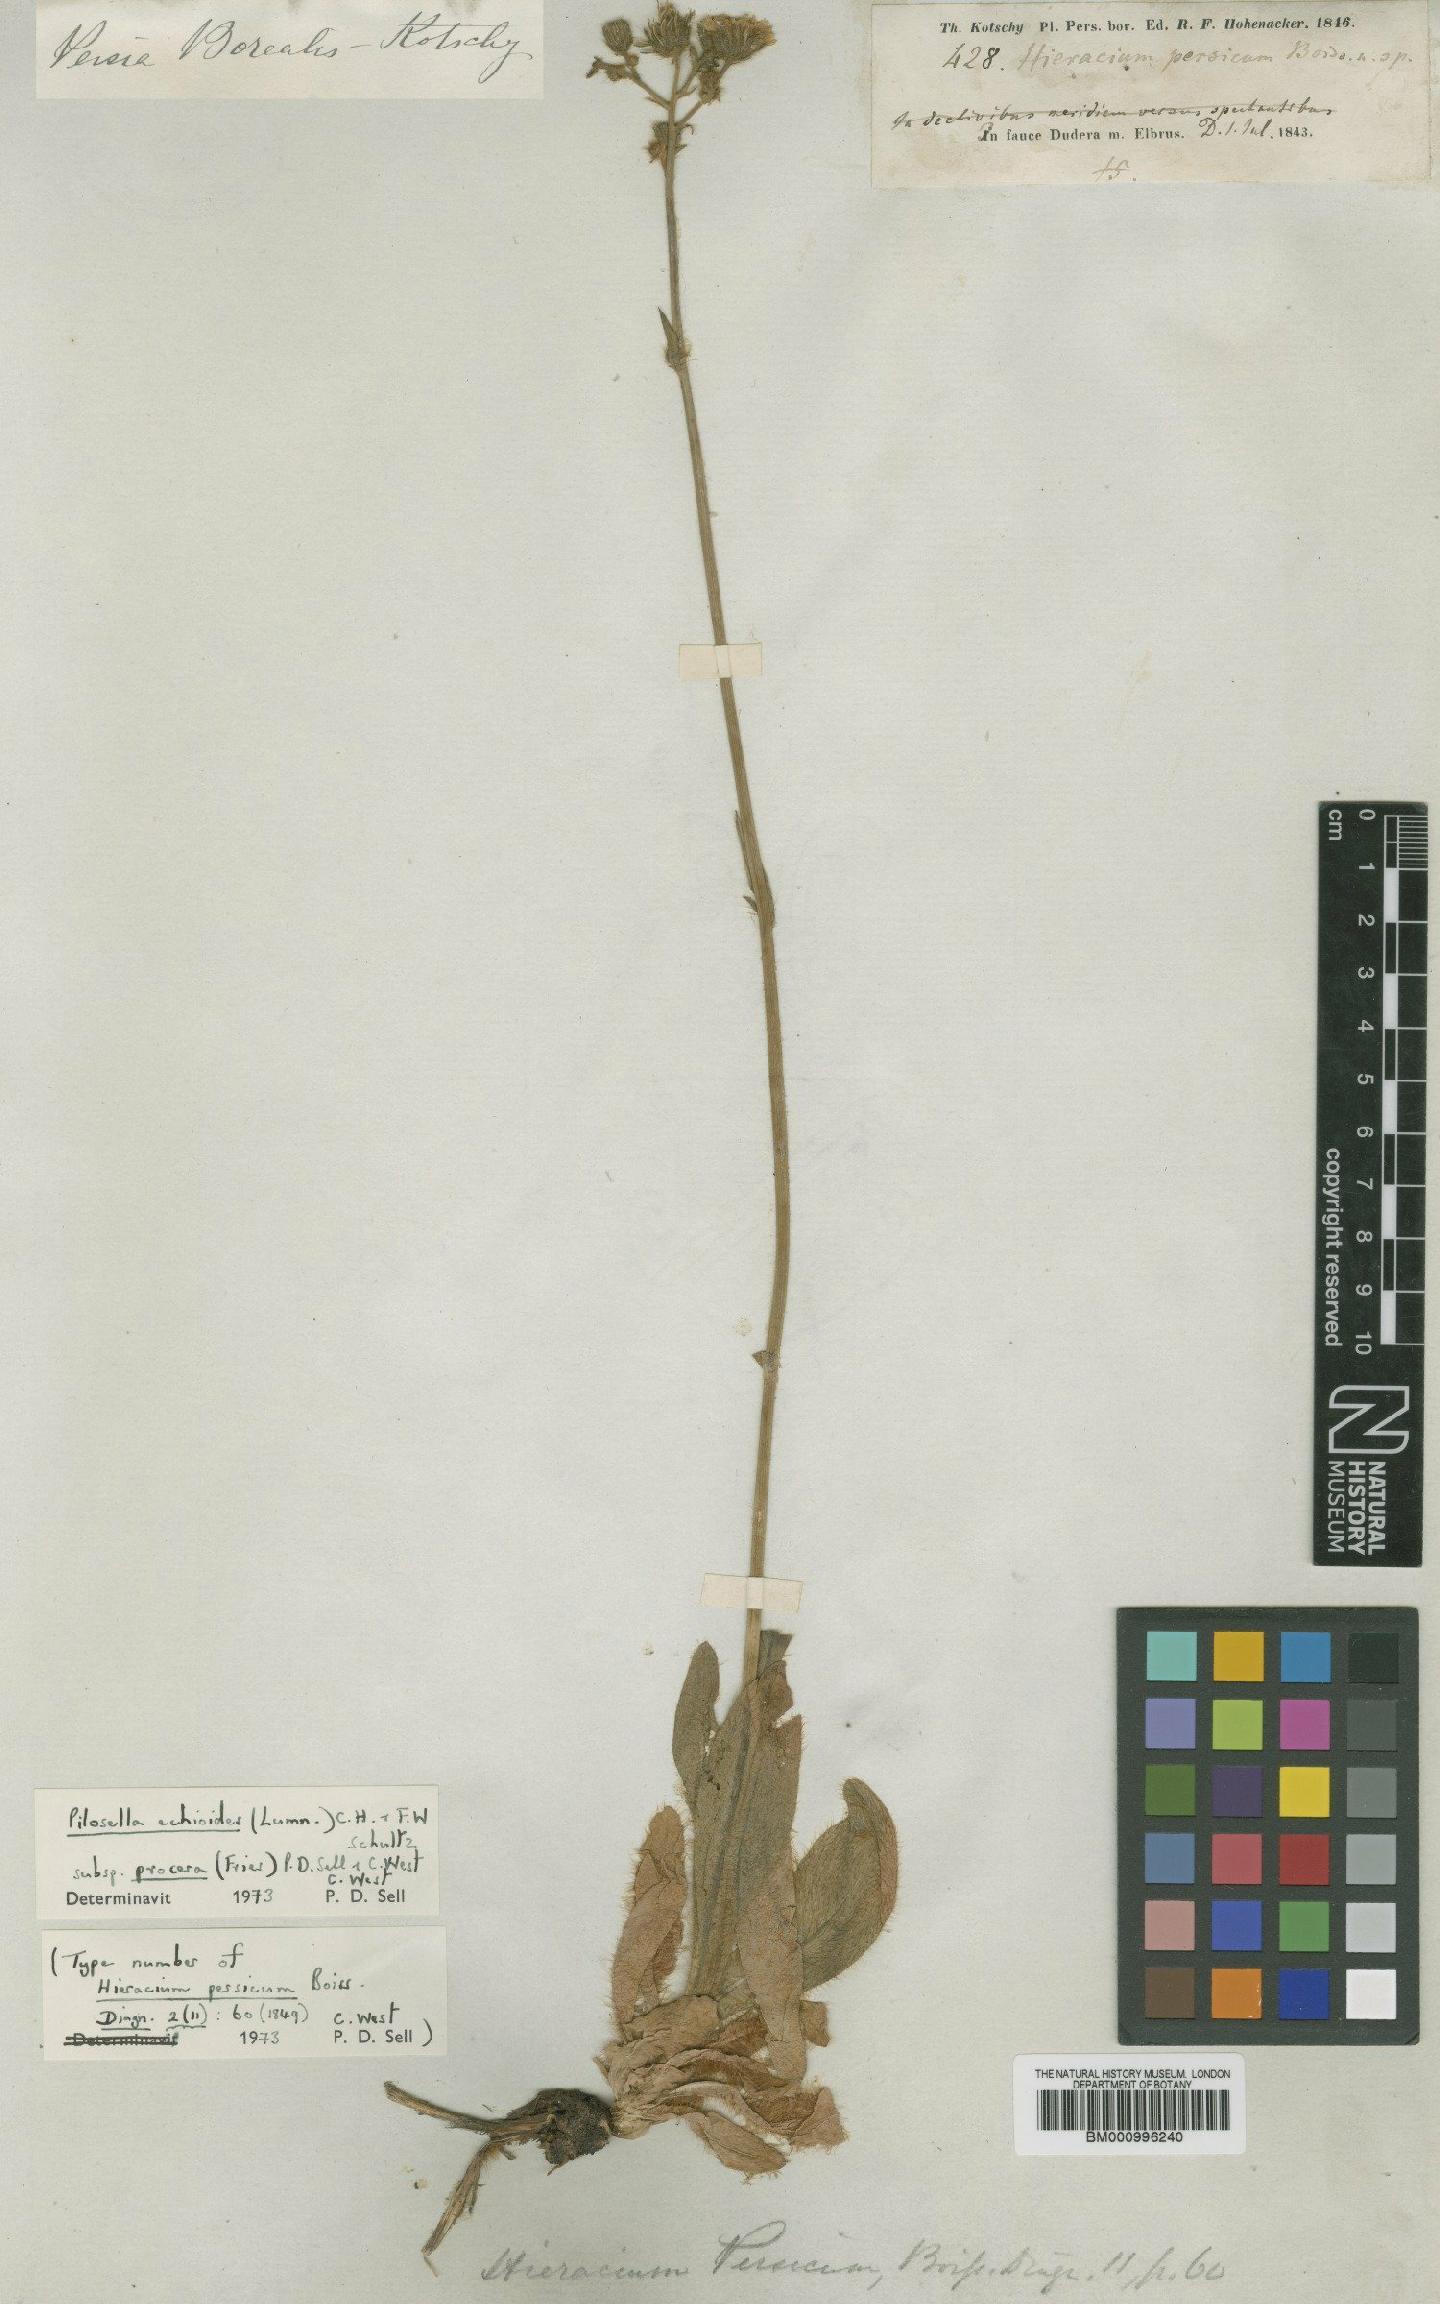 To NHMUK collection (Pilosella echioides (Lumn.) Schultz; Type; NHMUK:ecatalogue:480447)